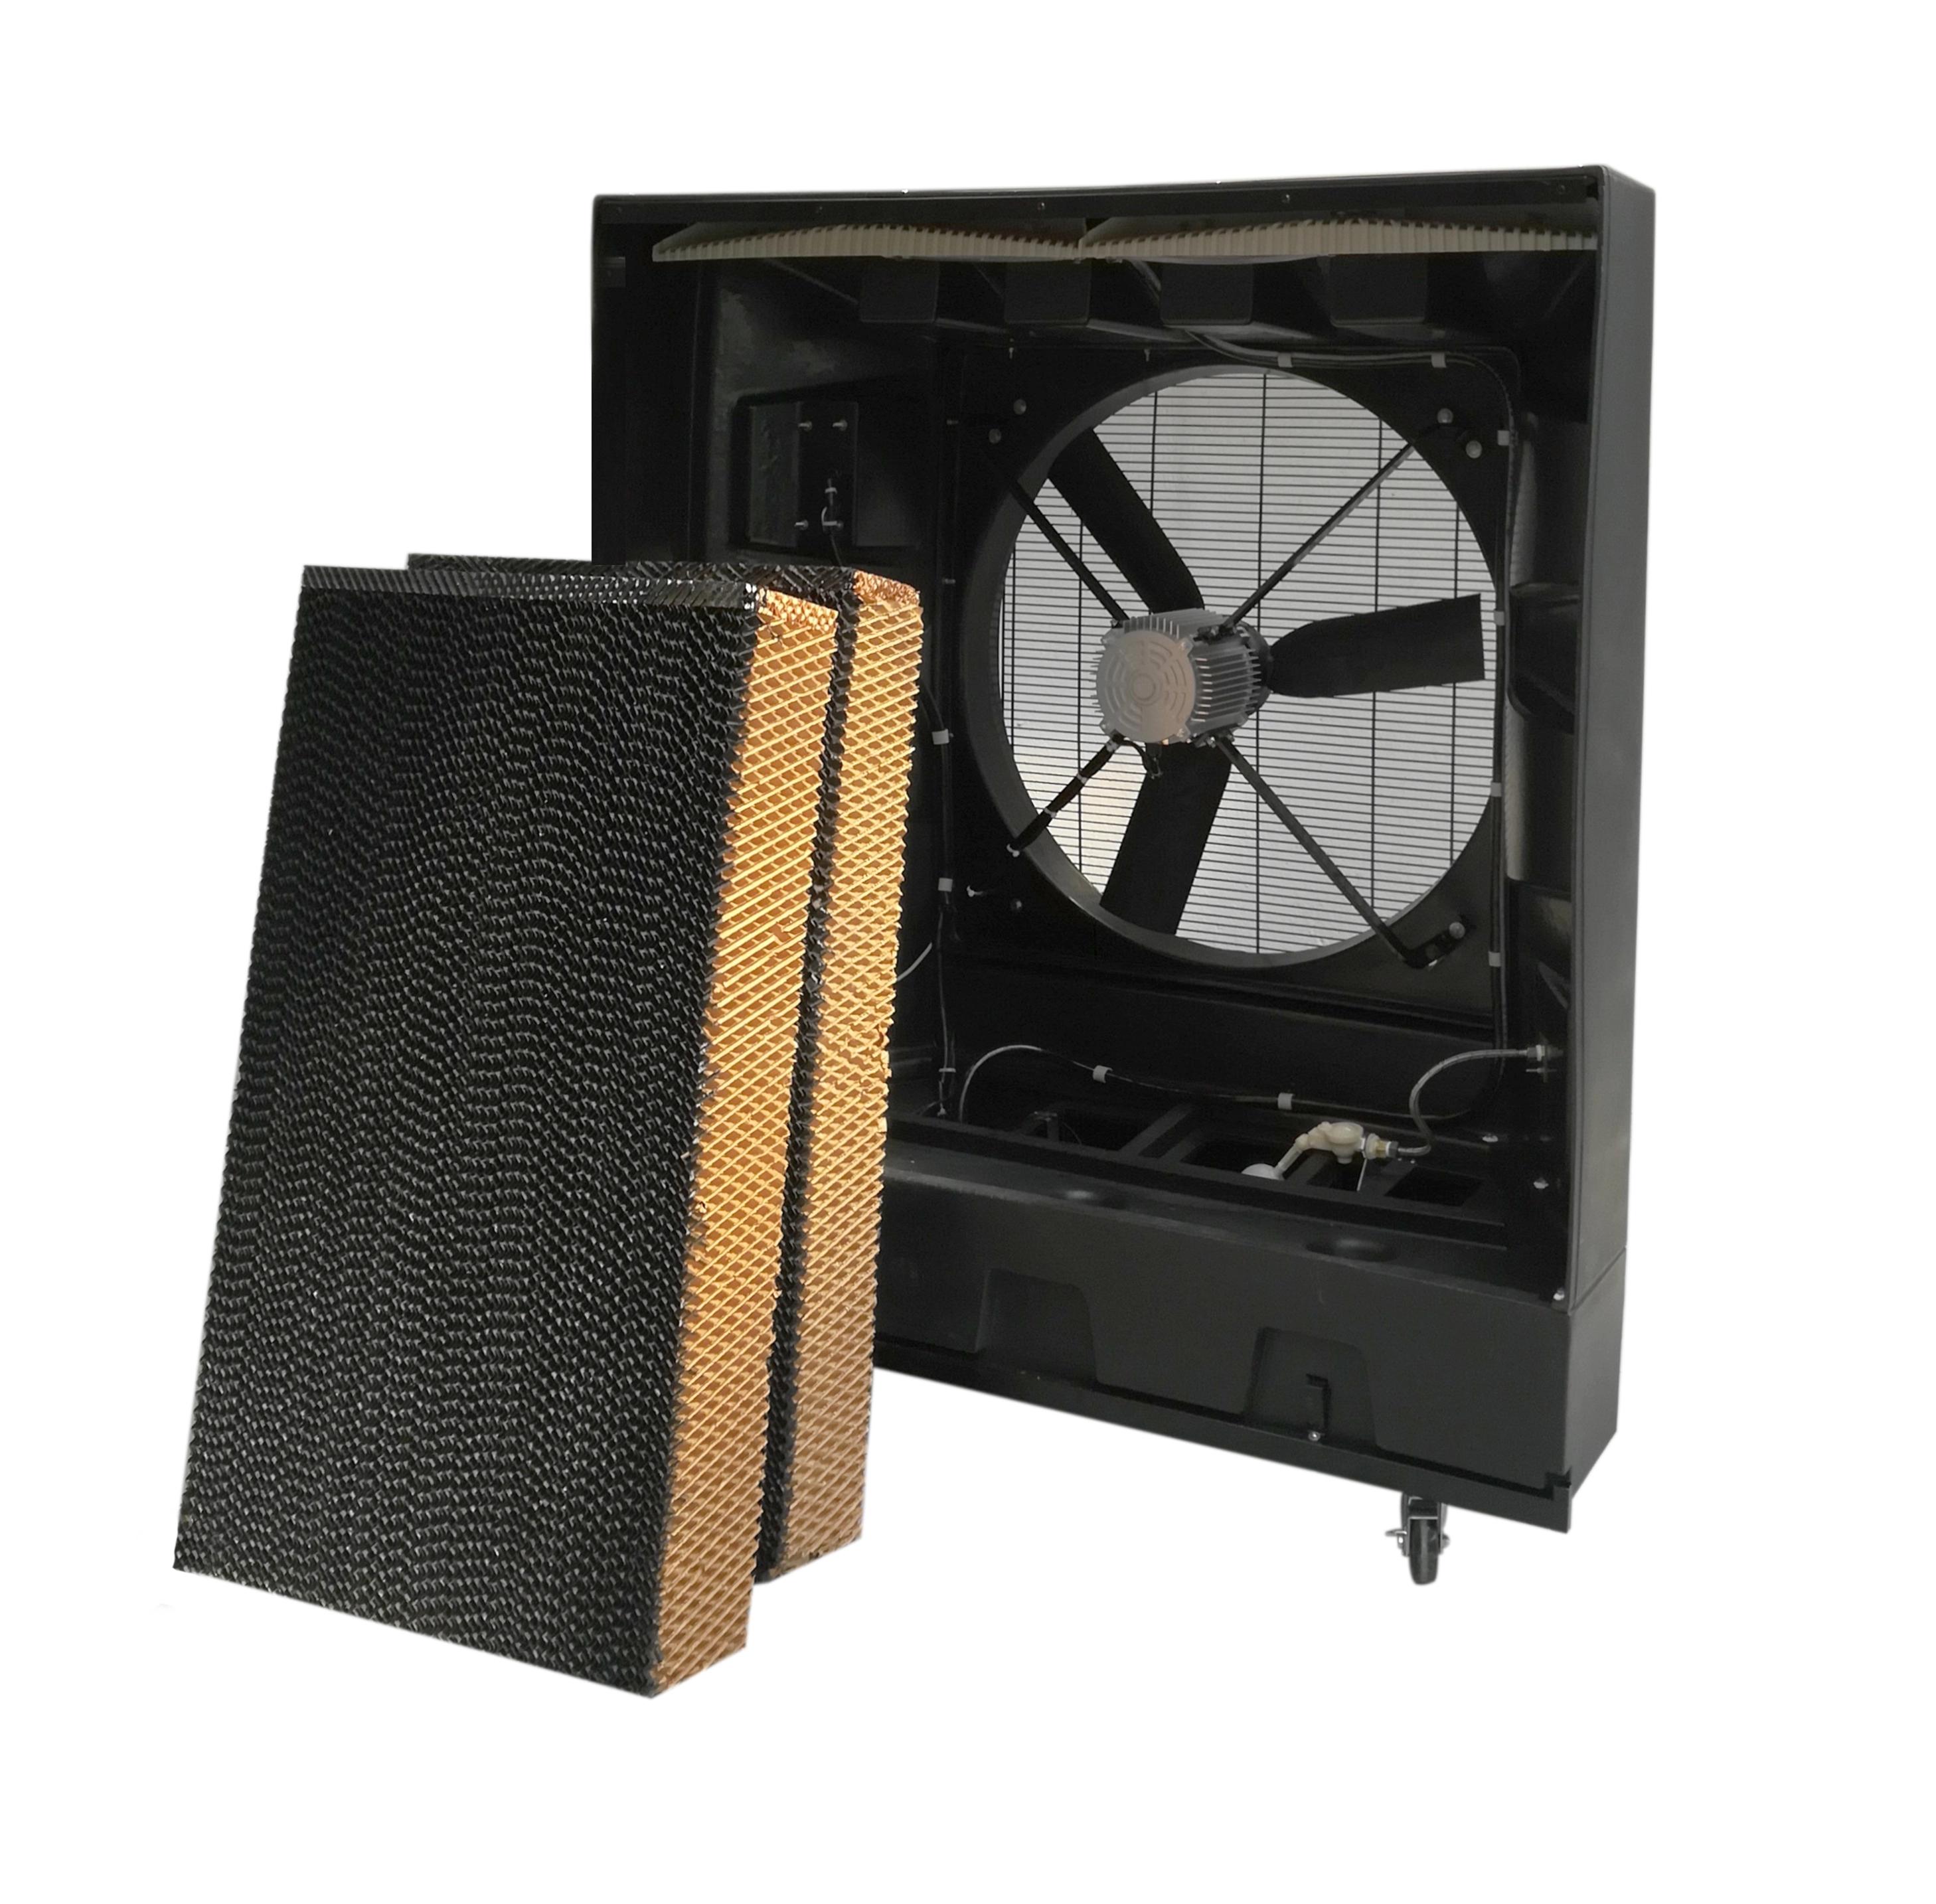 Best Seller Evaporative Air Cooler in Black